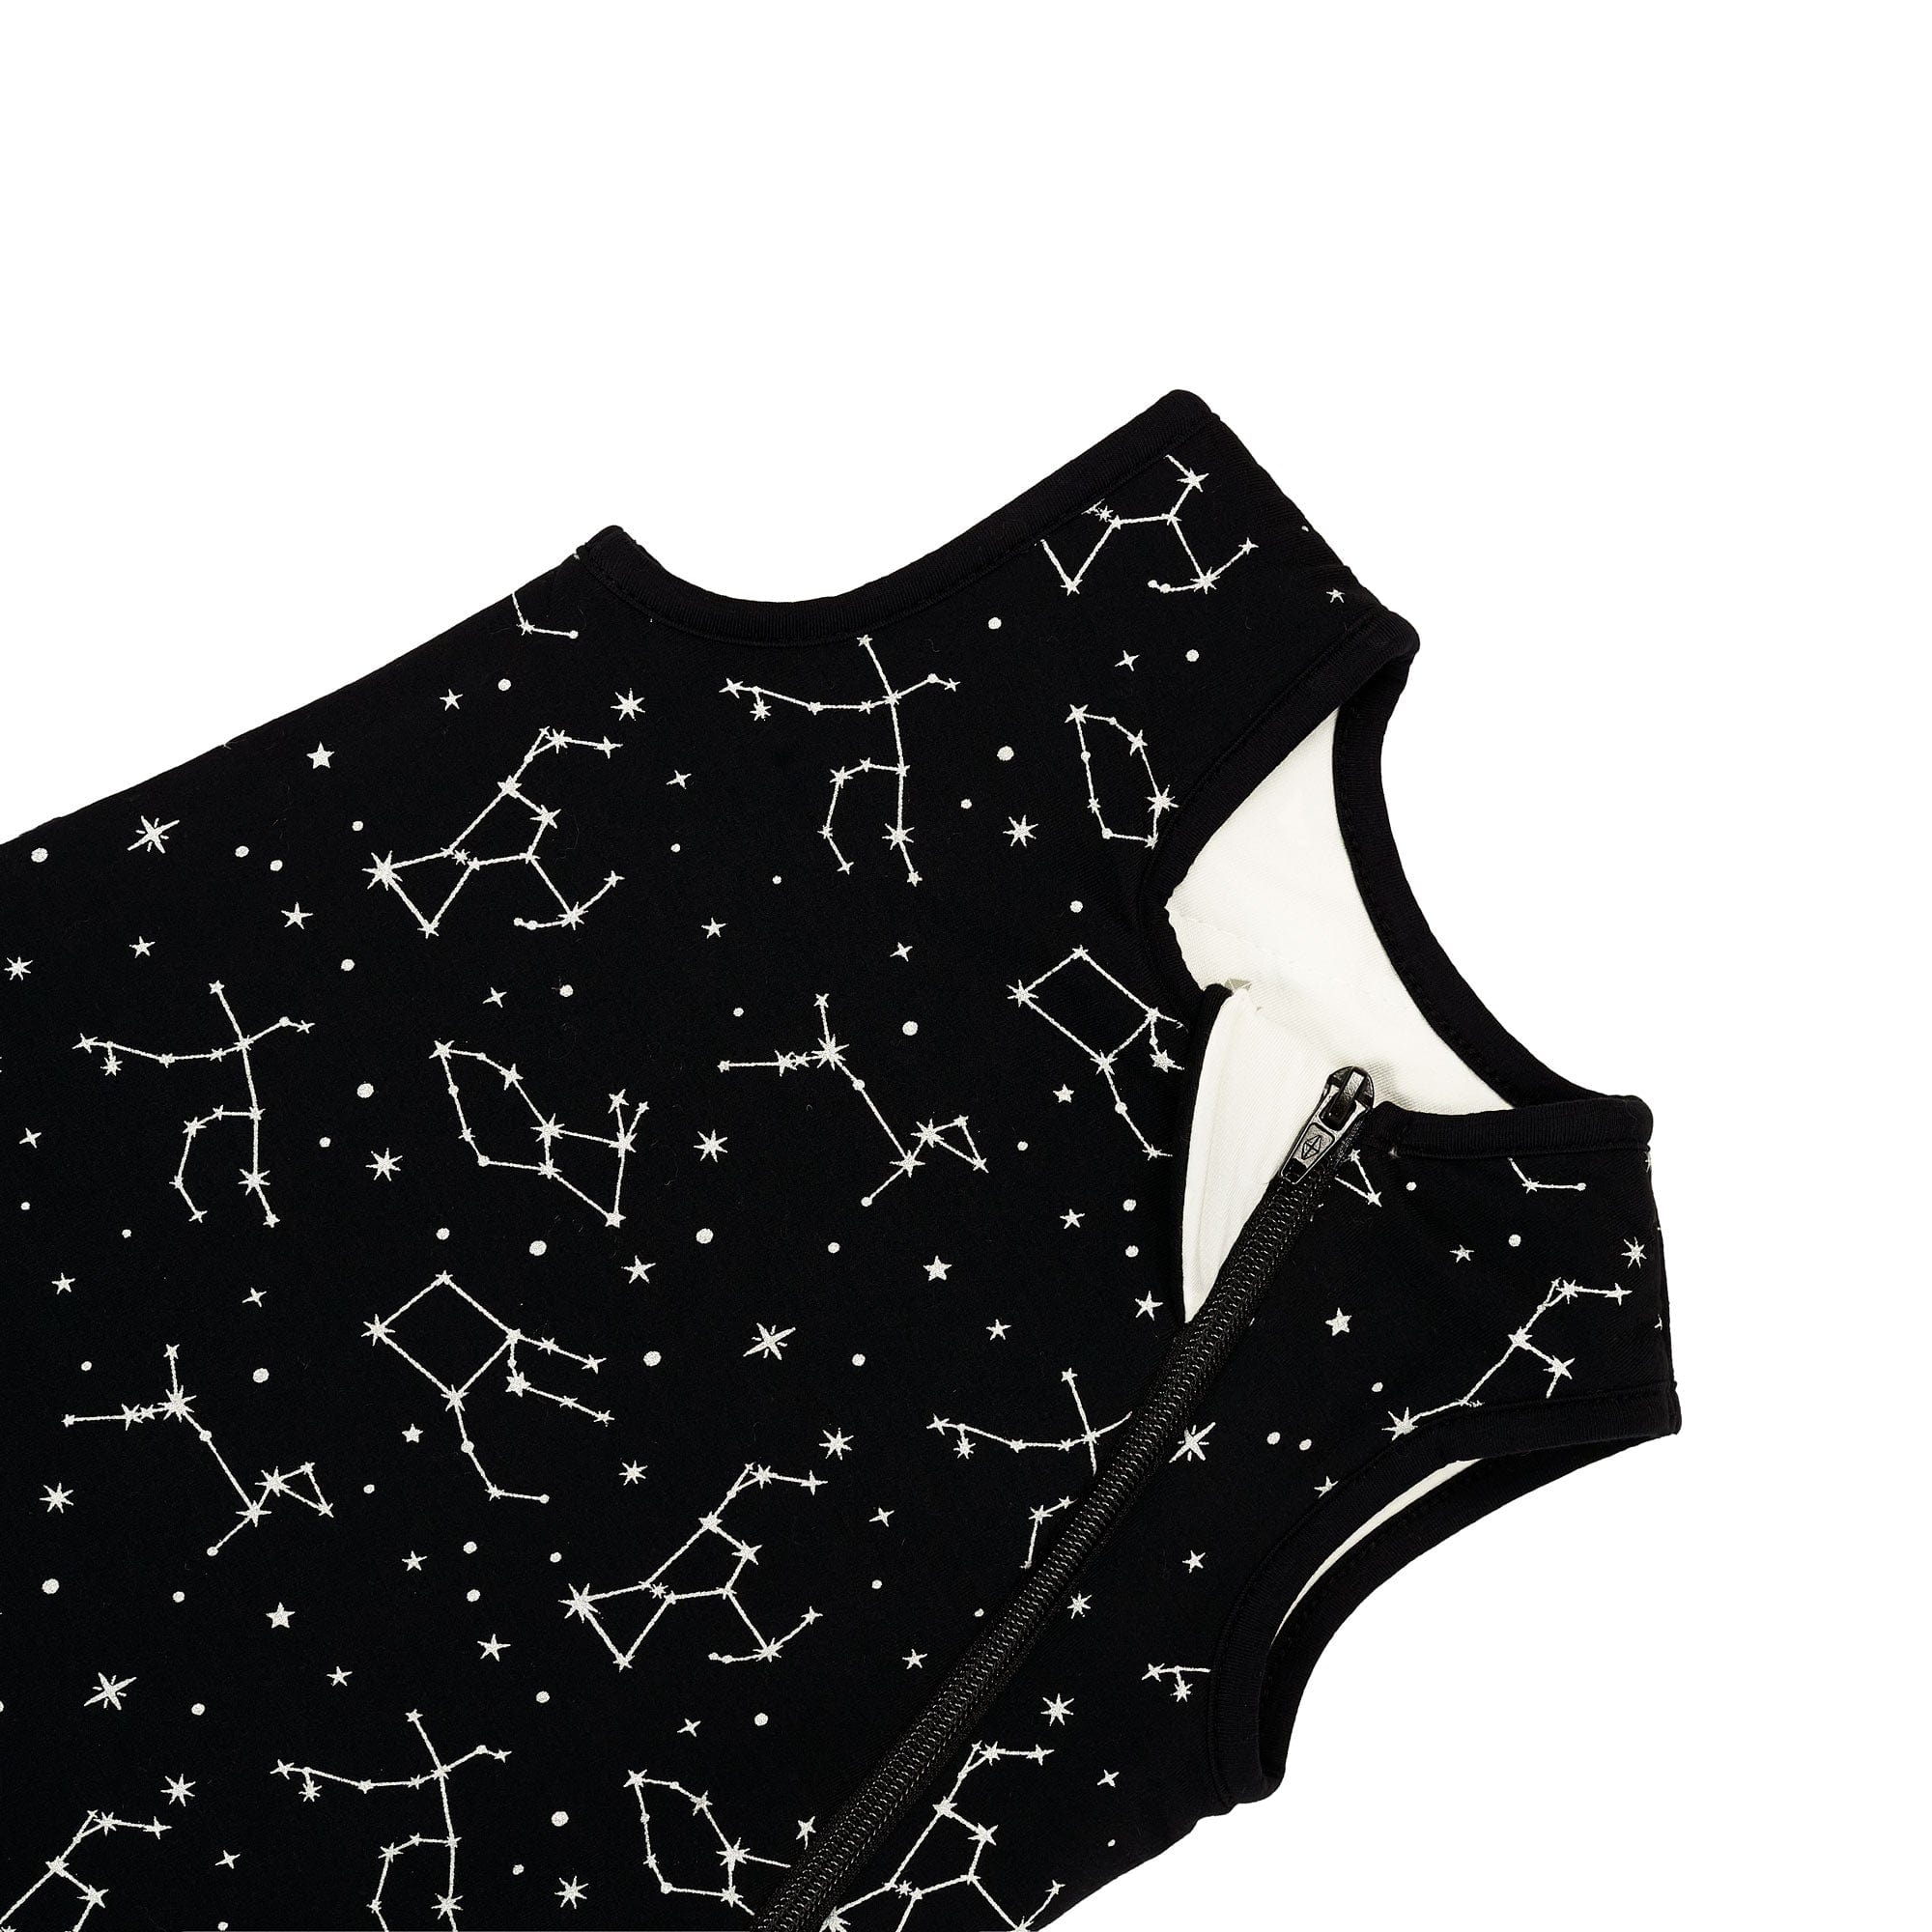 Zipper garage on Kyte Baby Sleep Bag in Midnight Constellations 1.0